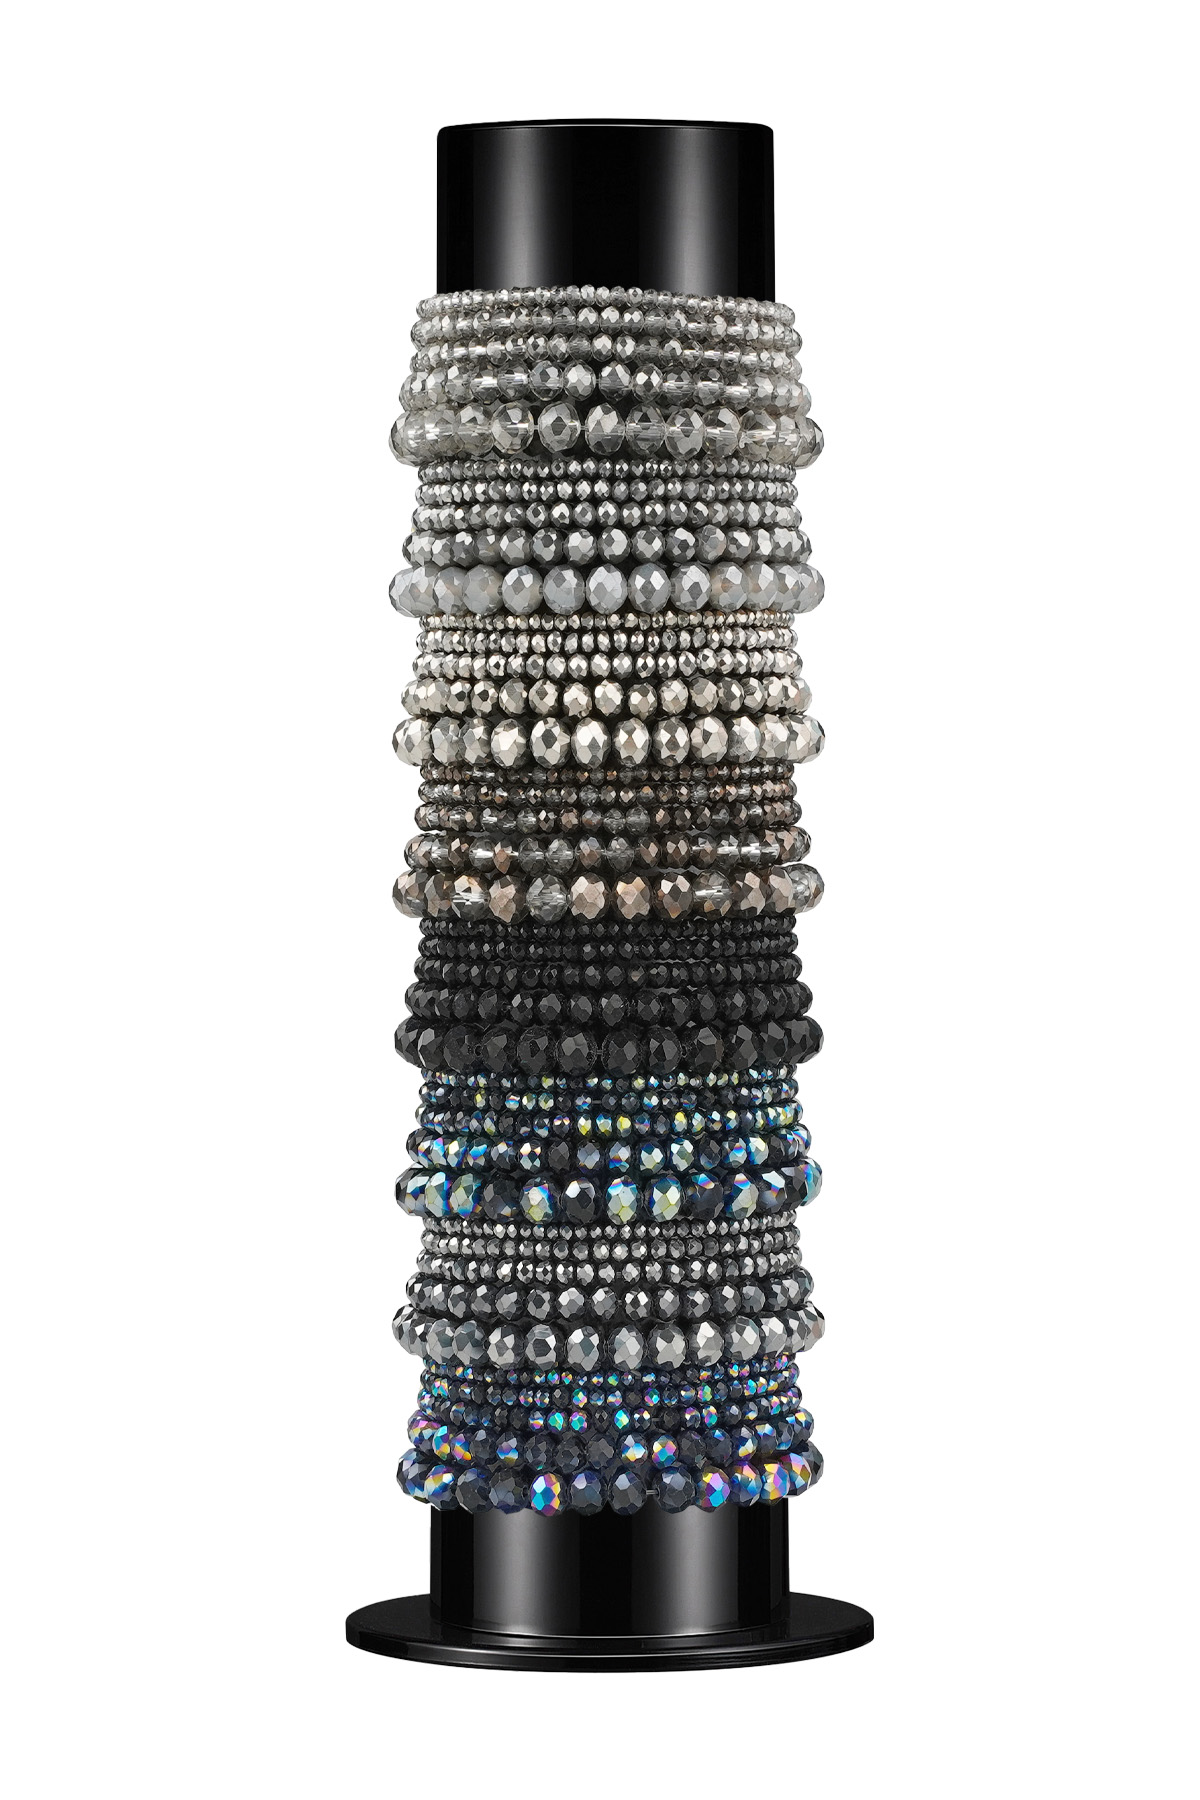 Bracelet display with glass bead bracelets - black grey